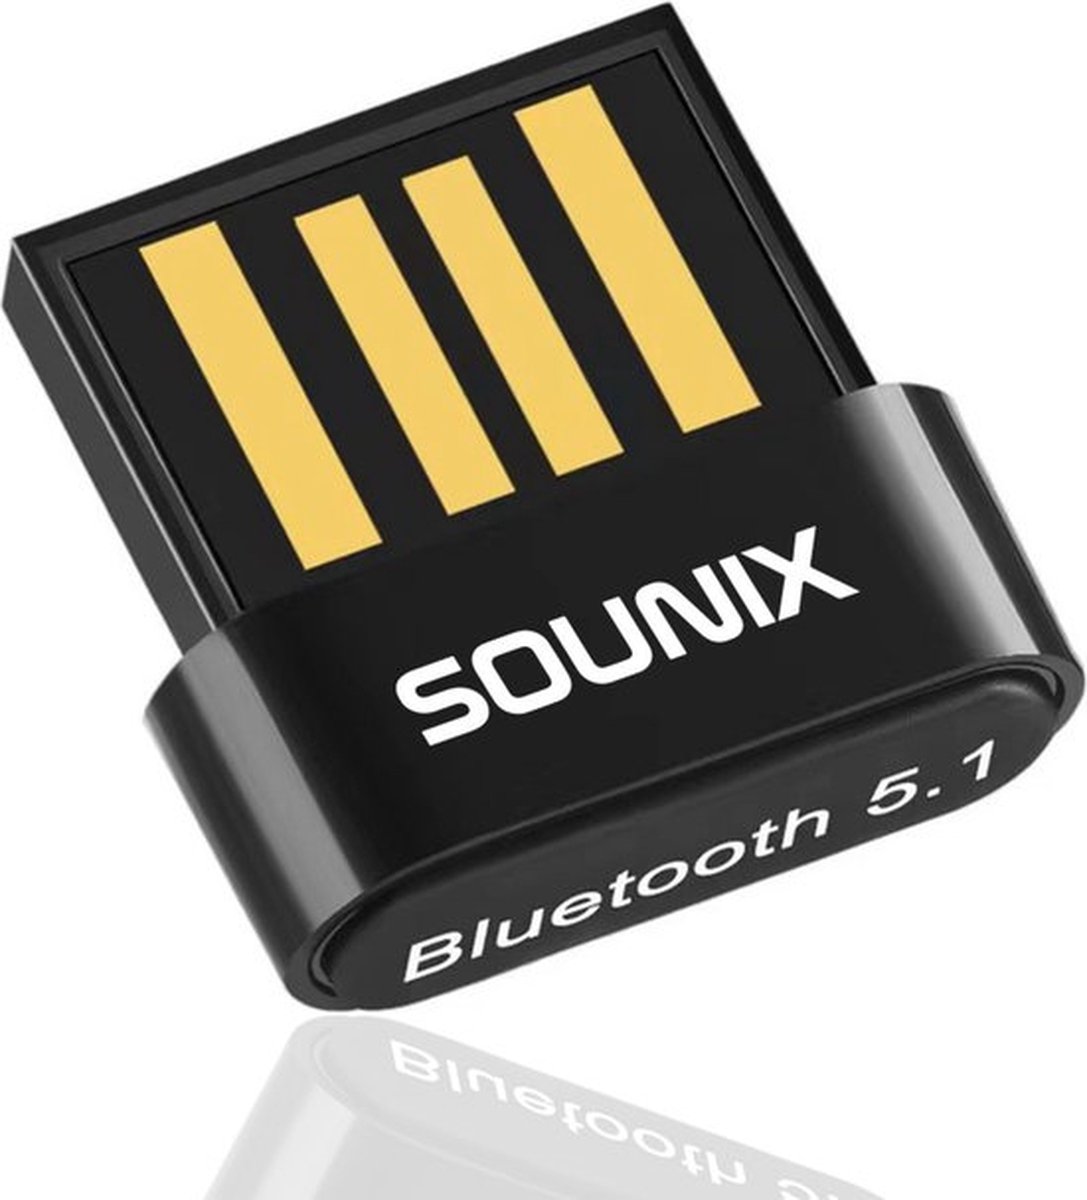 Sounix Bluetooth Adapter